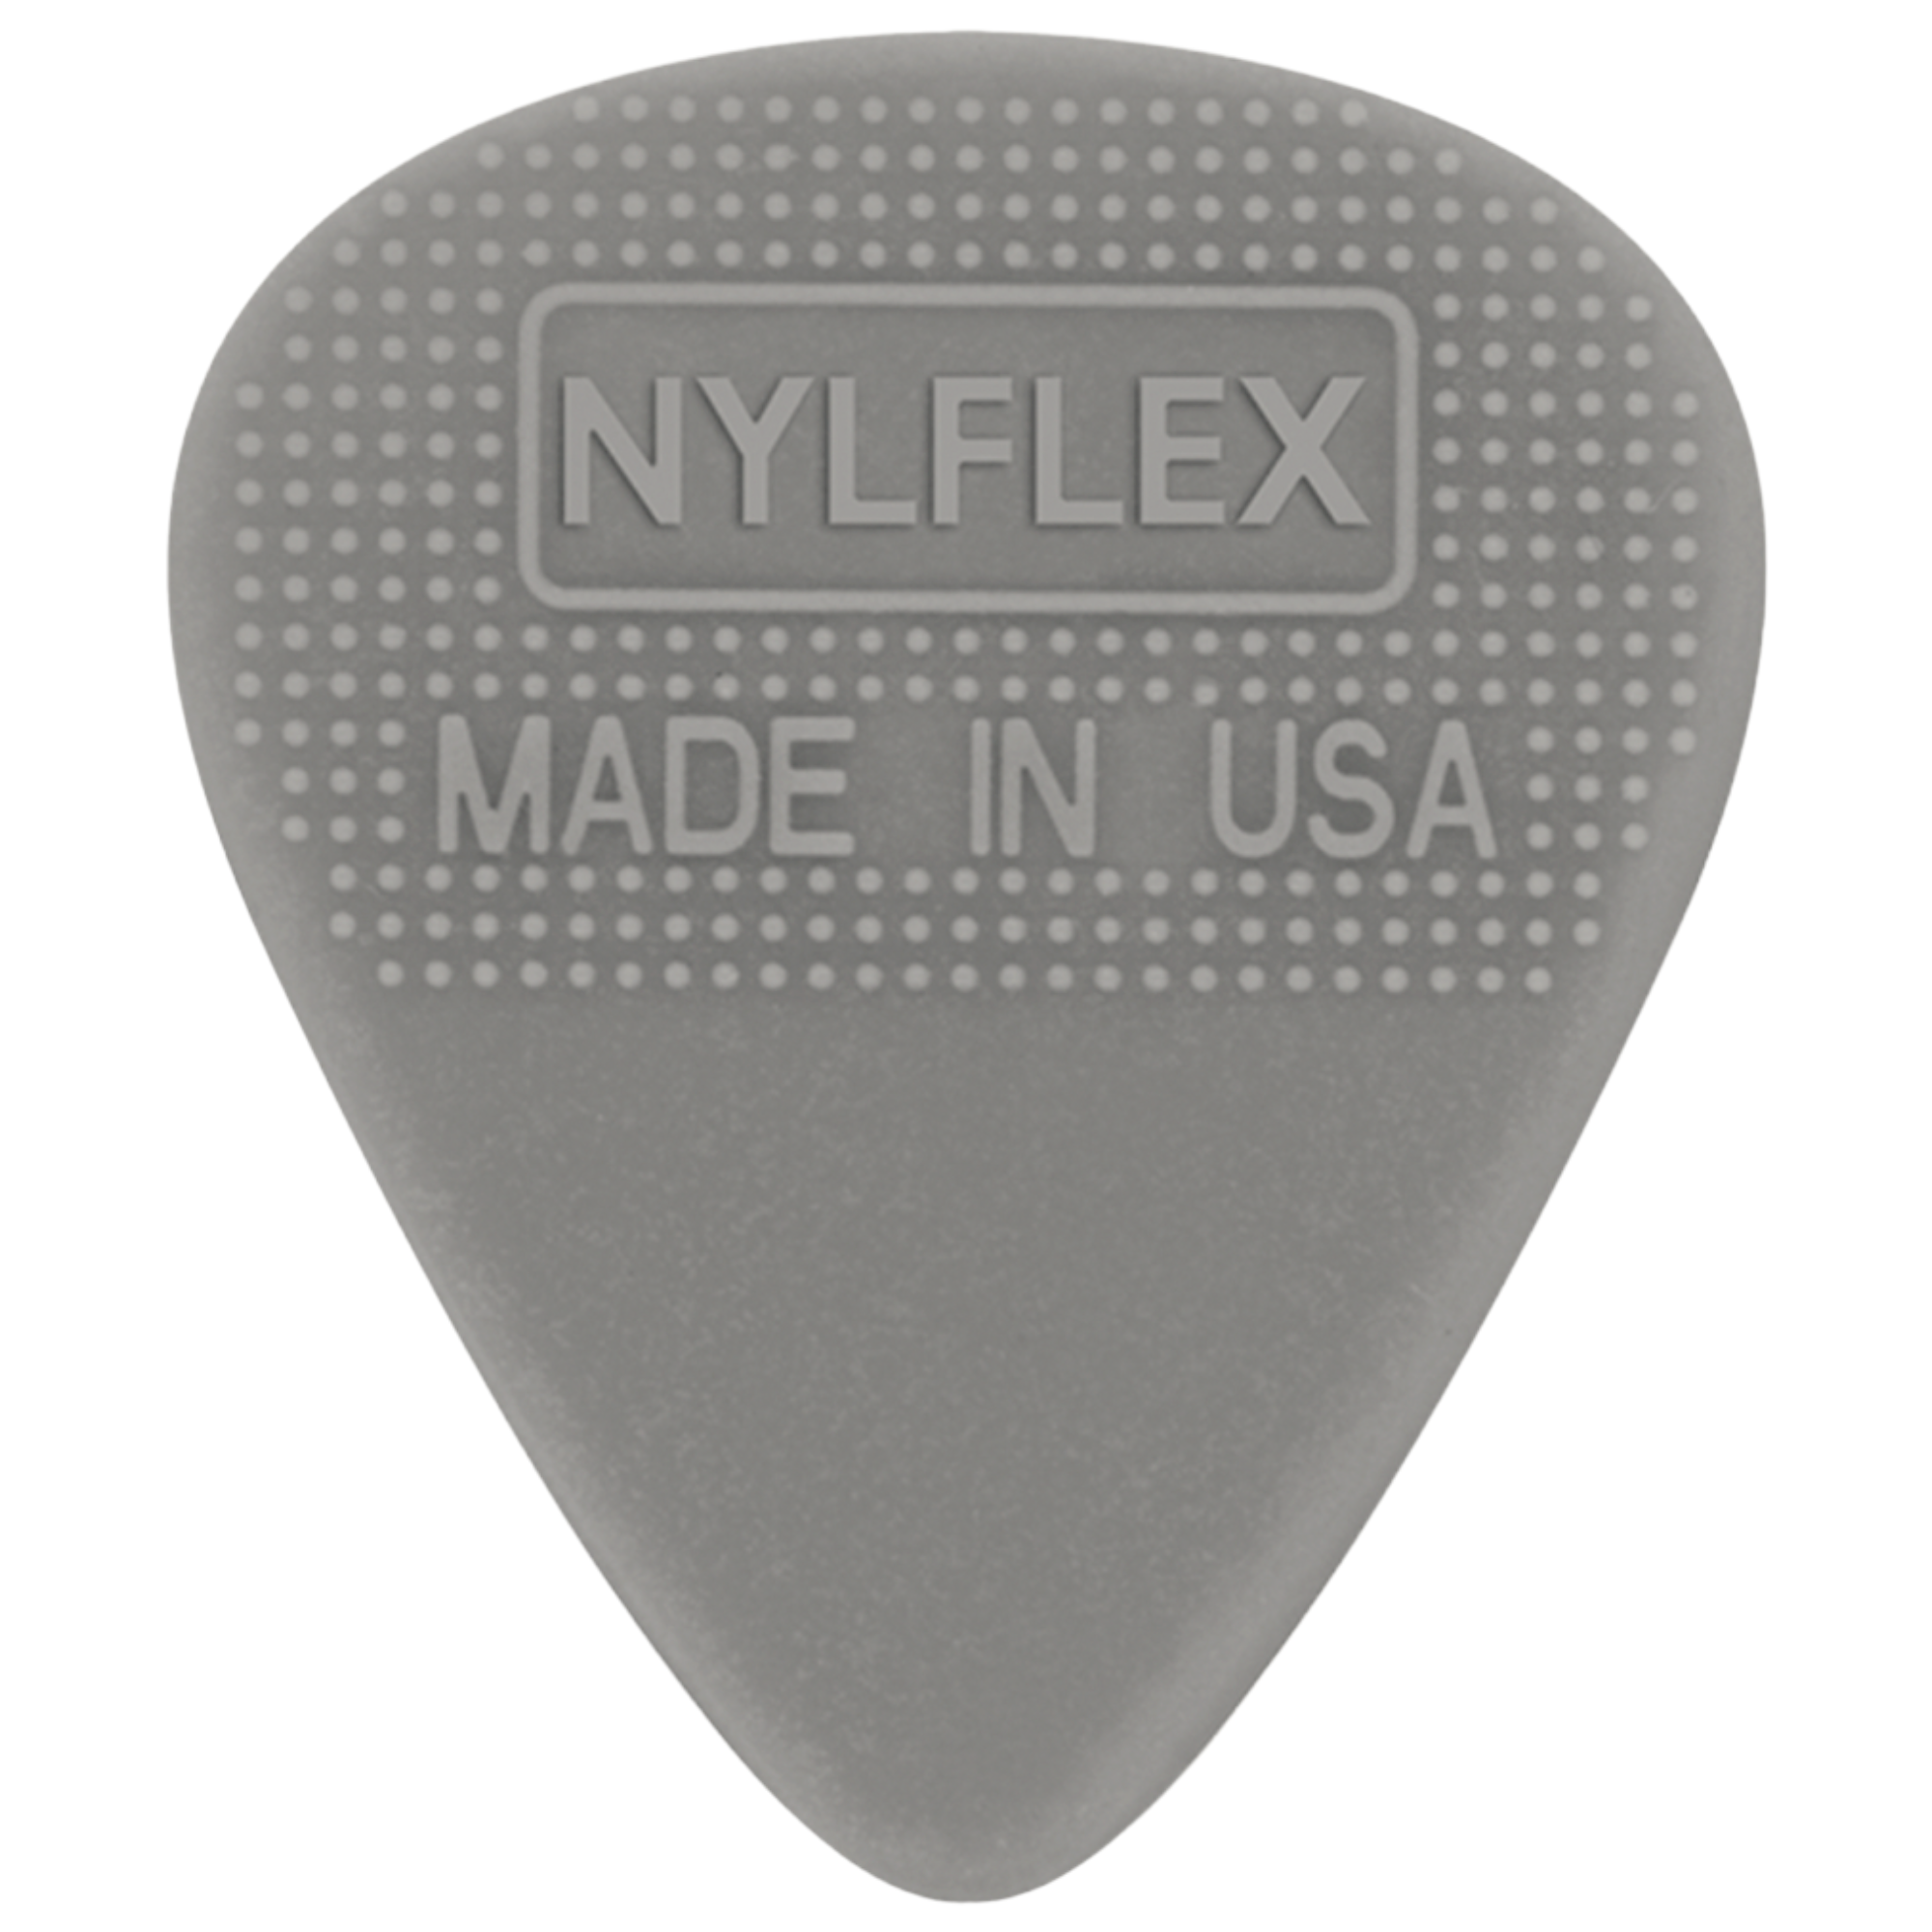 D'Addario Nylflex Guitar Picks (10 Pack)